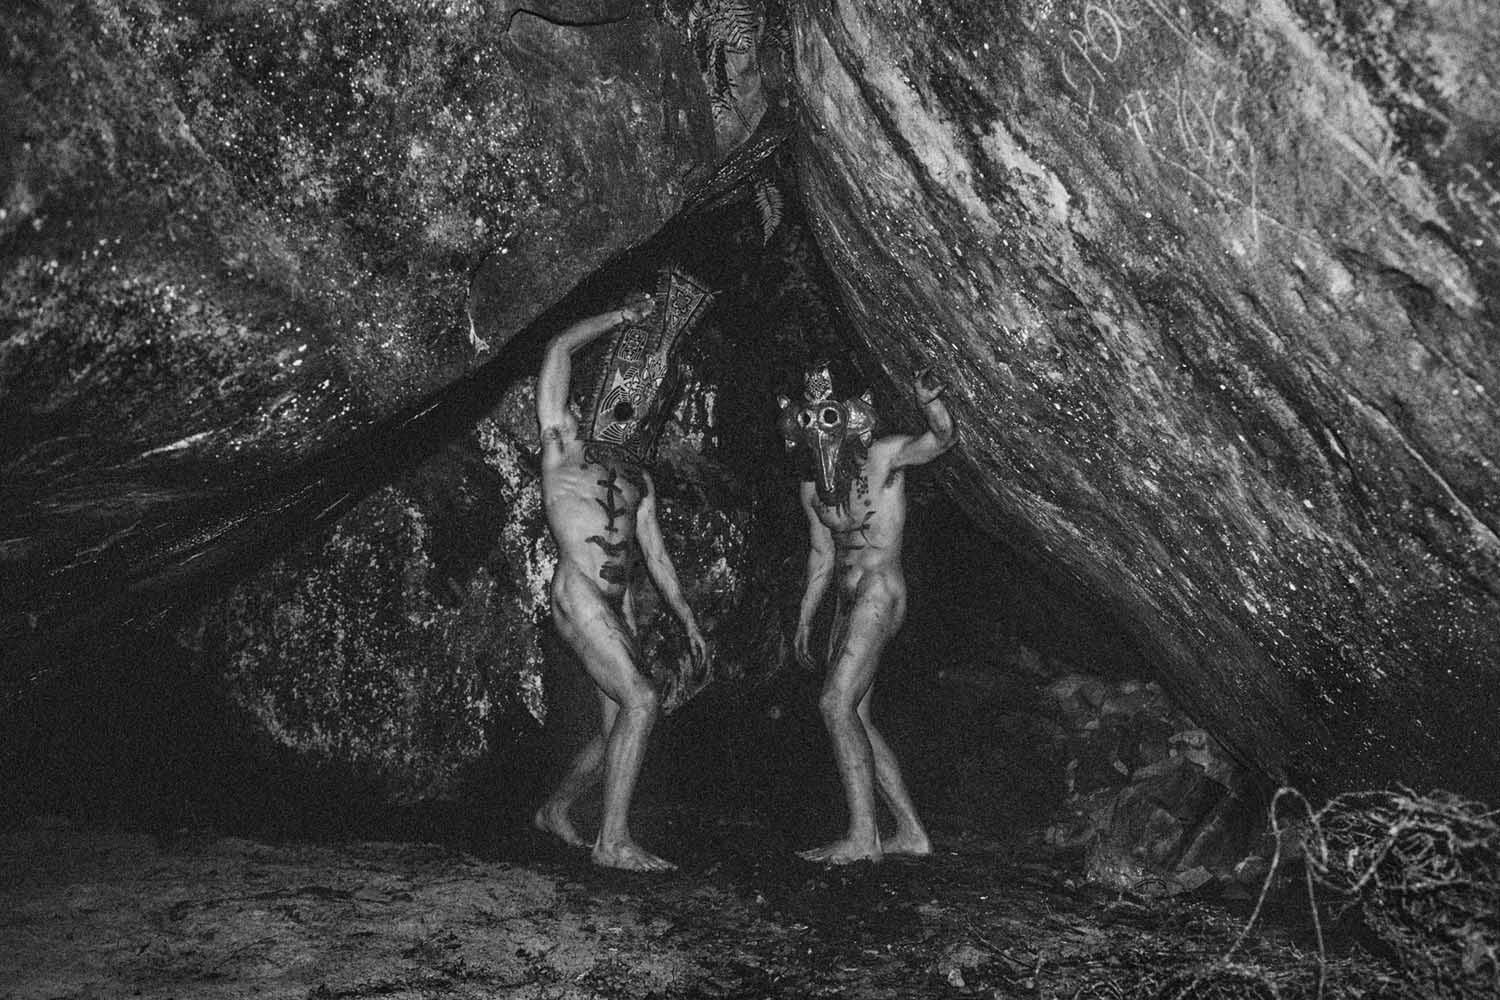 Leonard Condemine - black and white photograph of two nude men